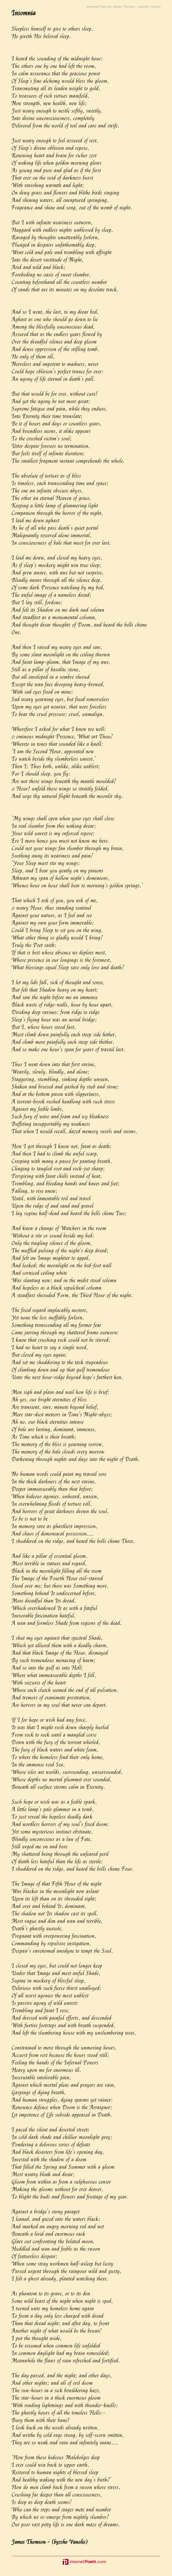 Insomnia Poem By James Thomson Bysshe Vanolis